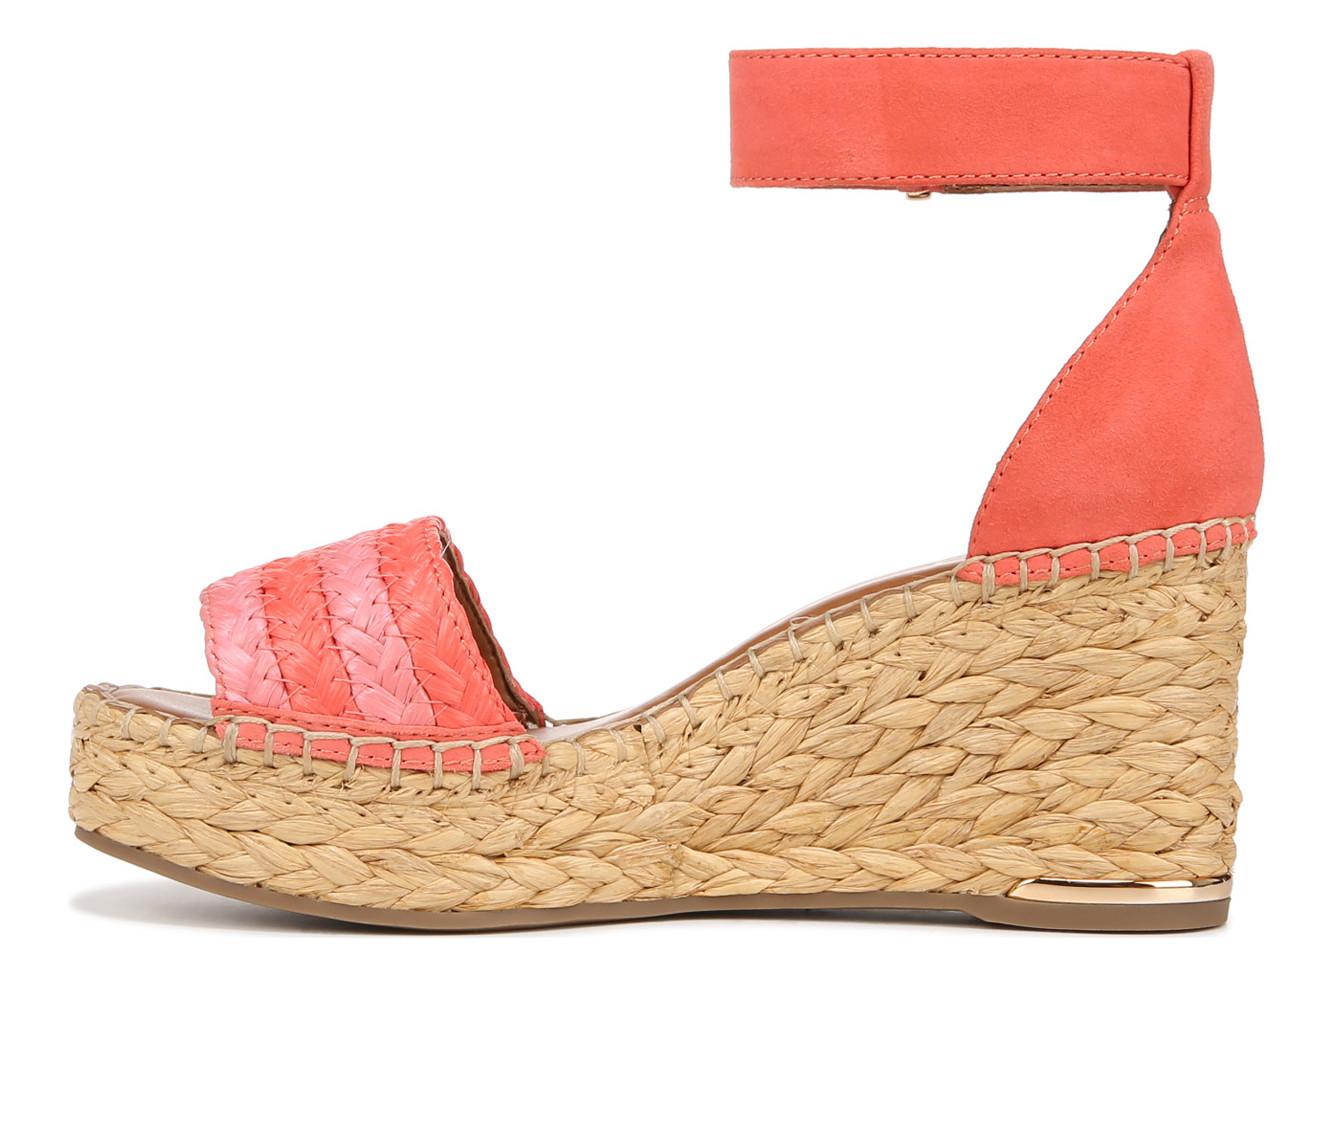 Women's Franco Sarto L-Clemens 5 Wedge Sandals